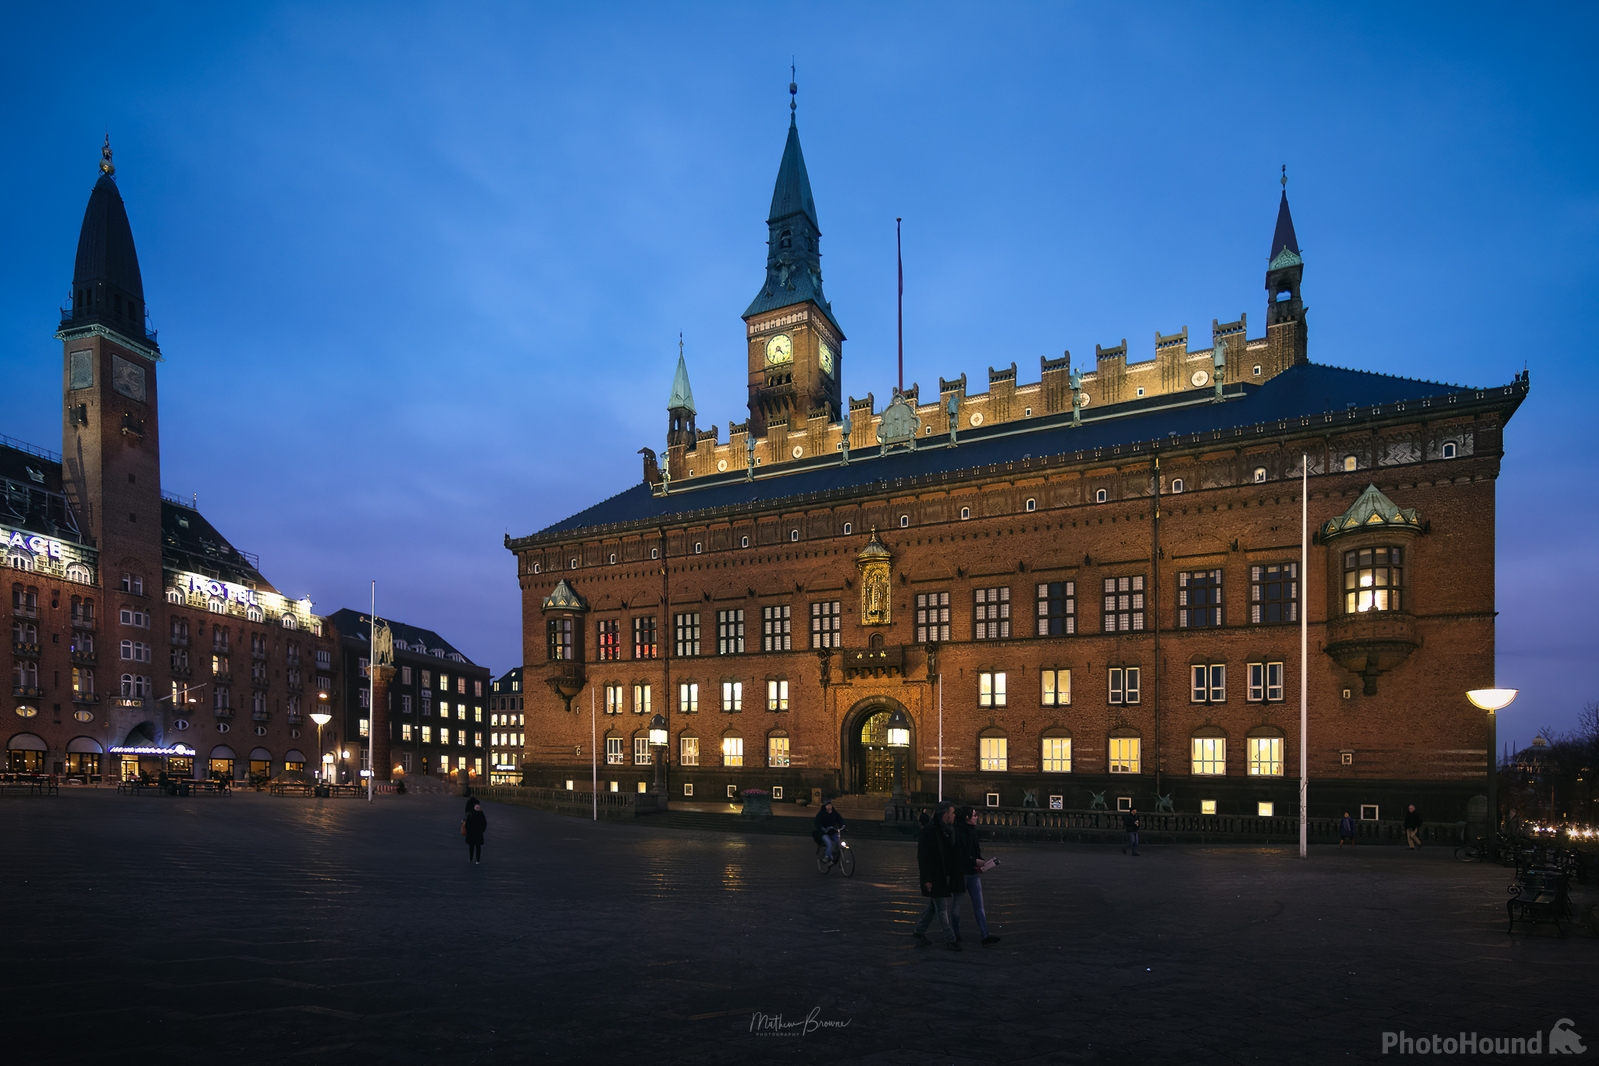 Image of Rådhuspladsen (City Hall Square) by Mathew Browne